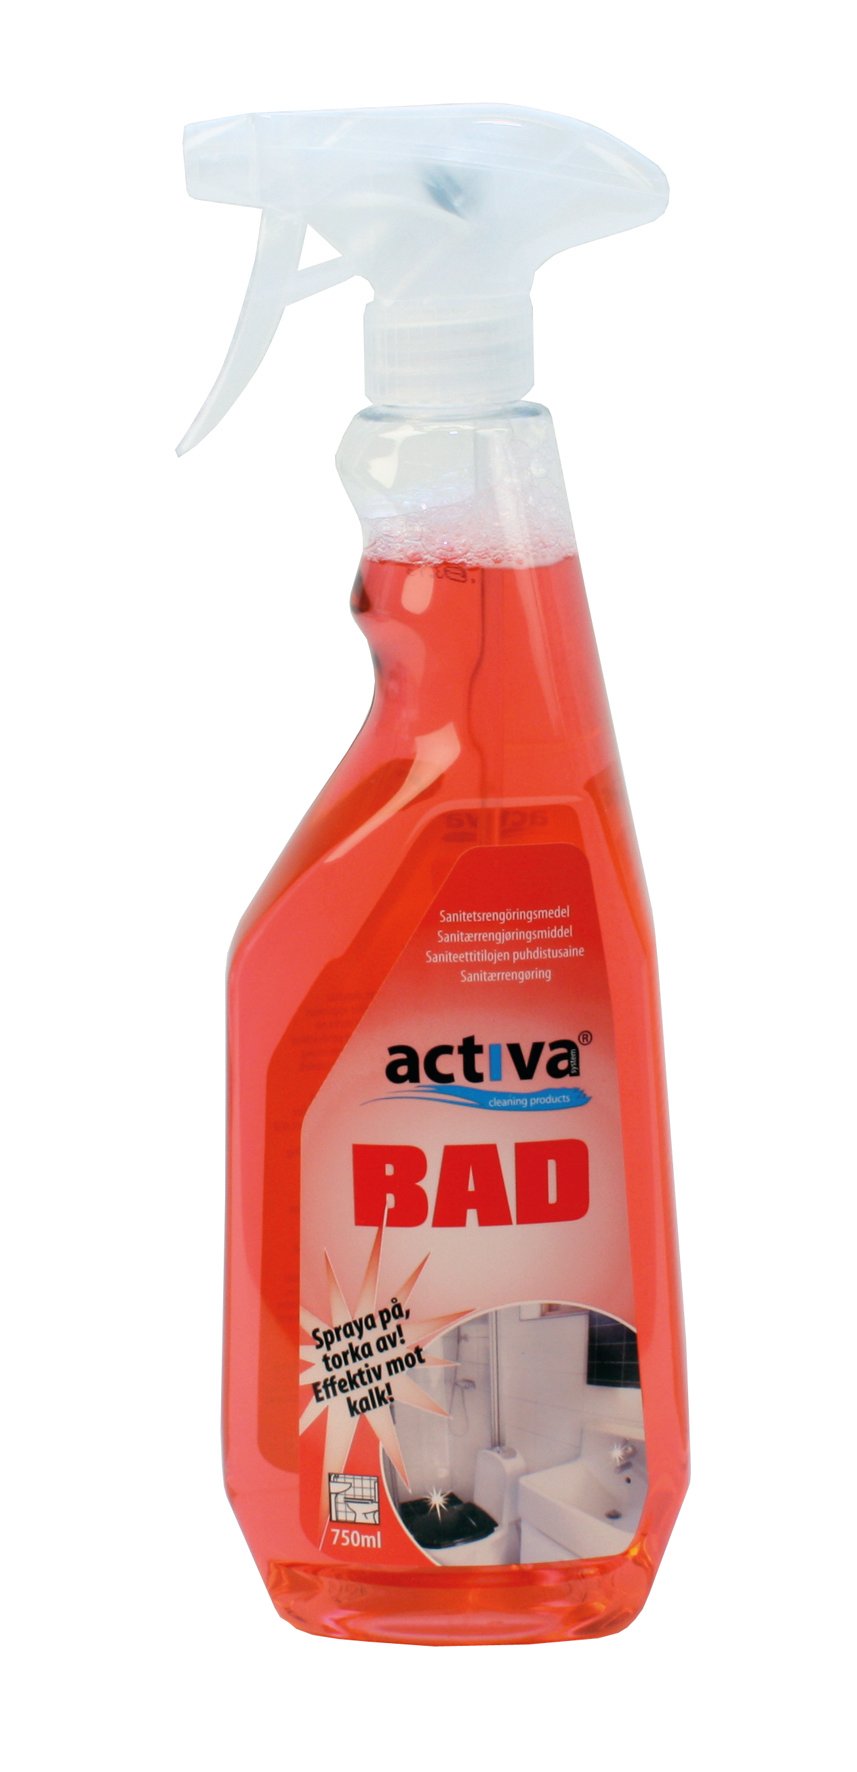 Sanitetsrent Activa Bad Spray 750ml 52070035